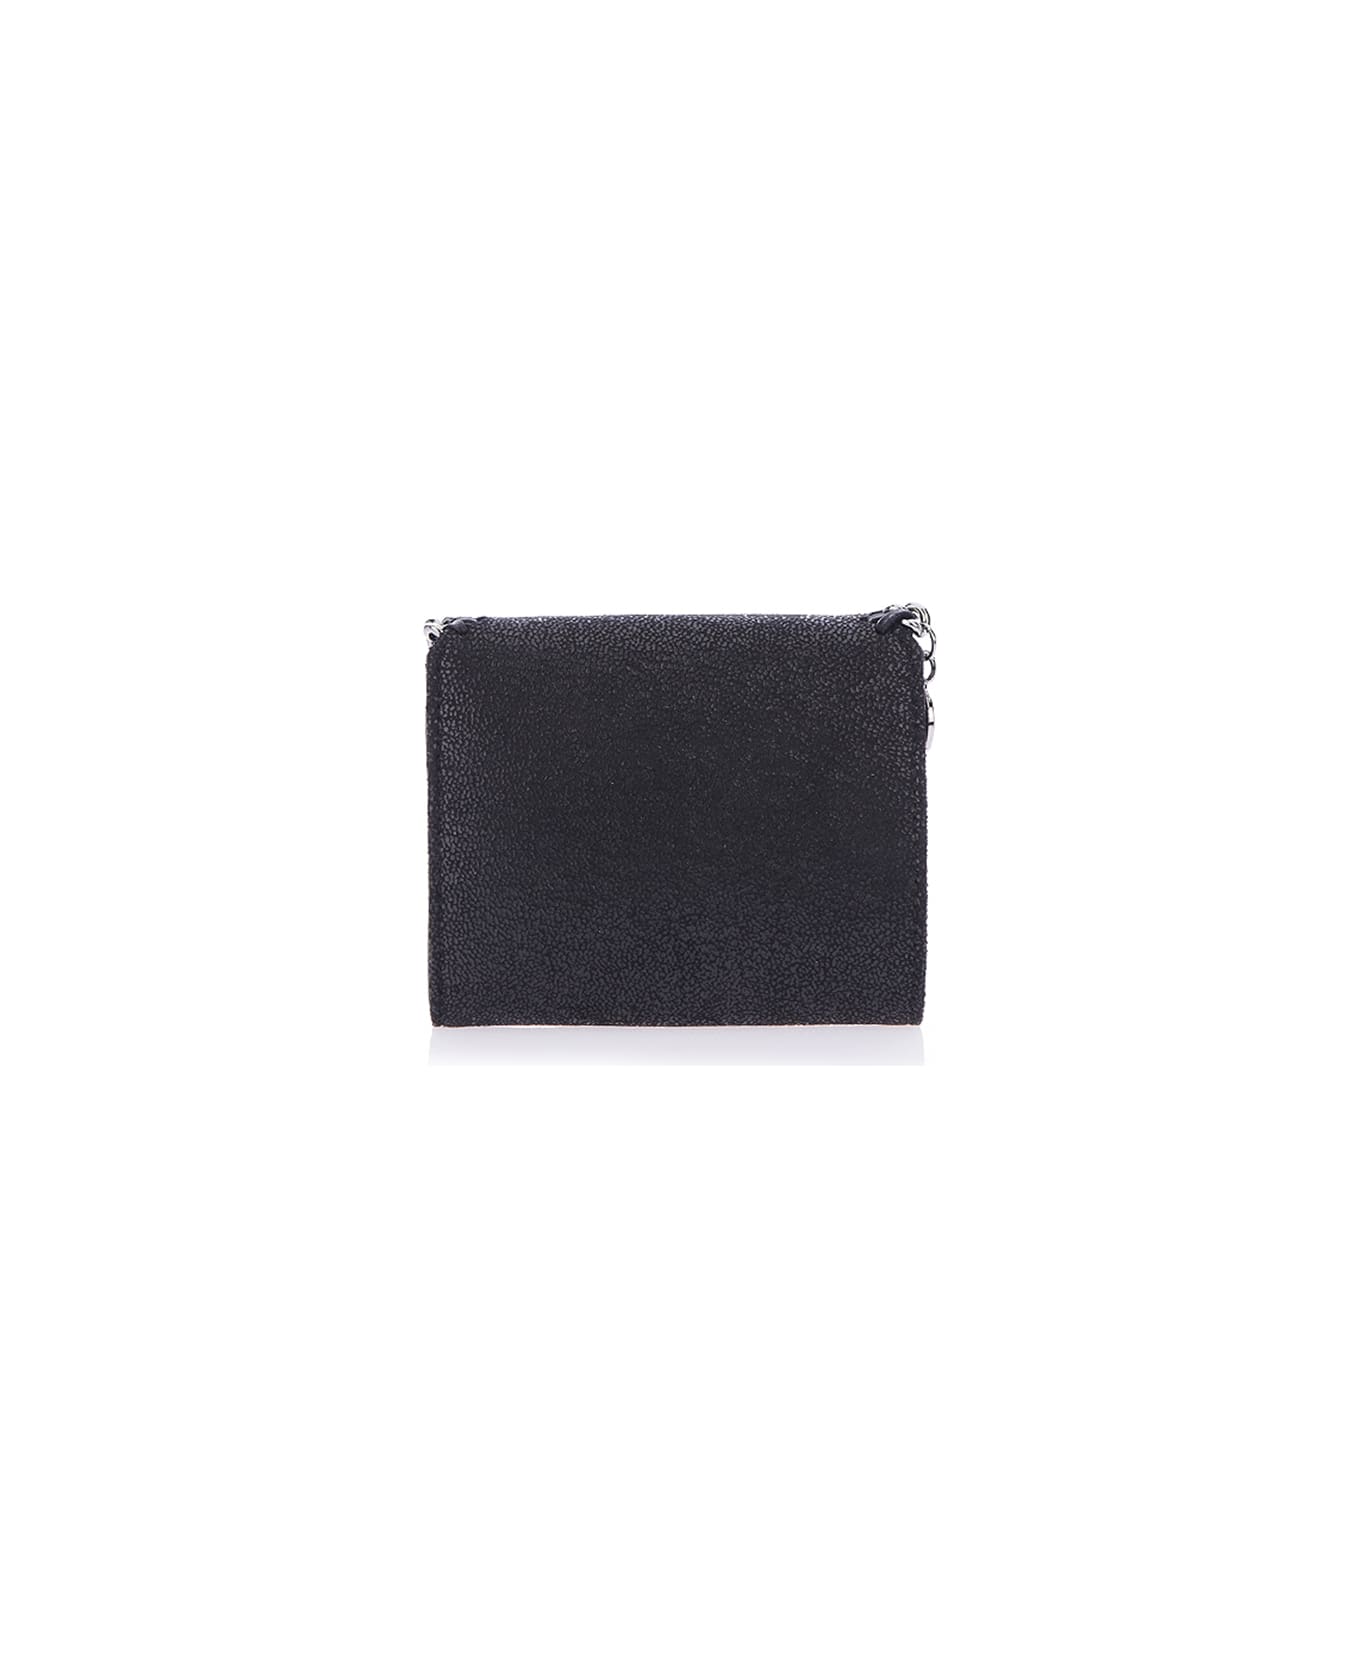 Stella McCartney Black 'falabella' Small Wallet - Black